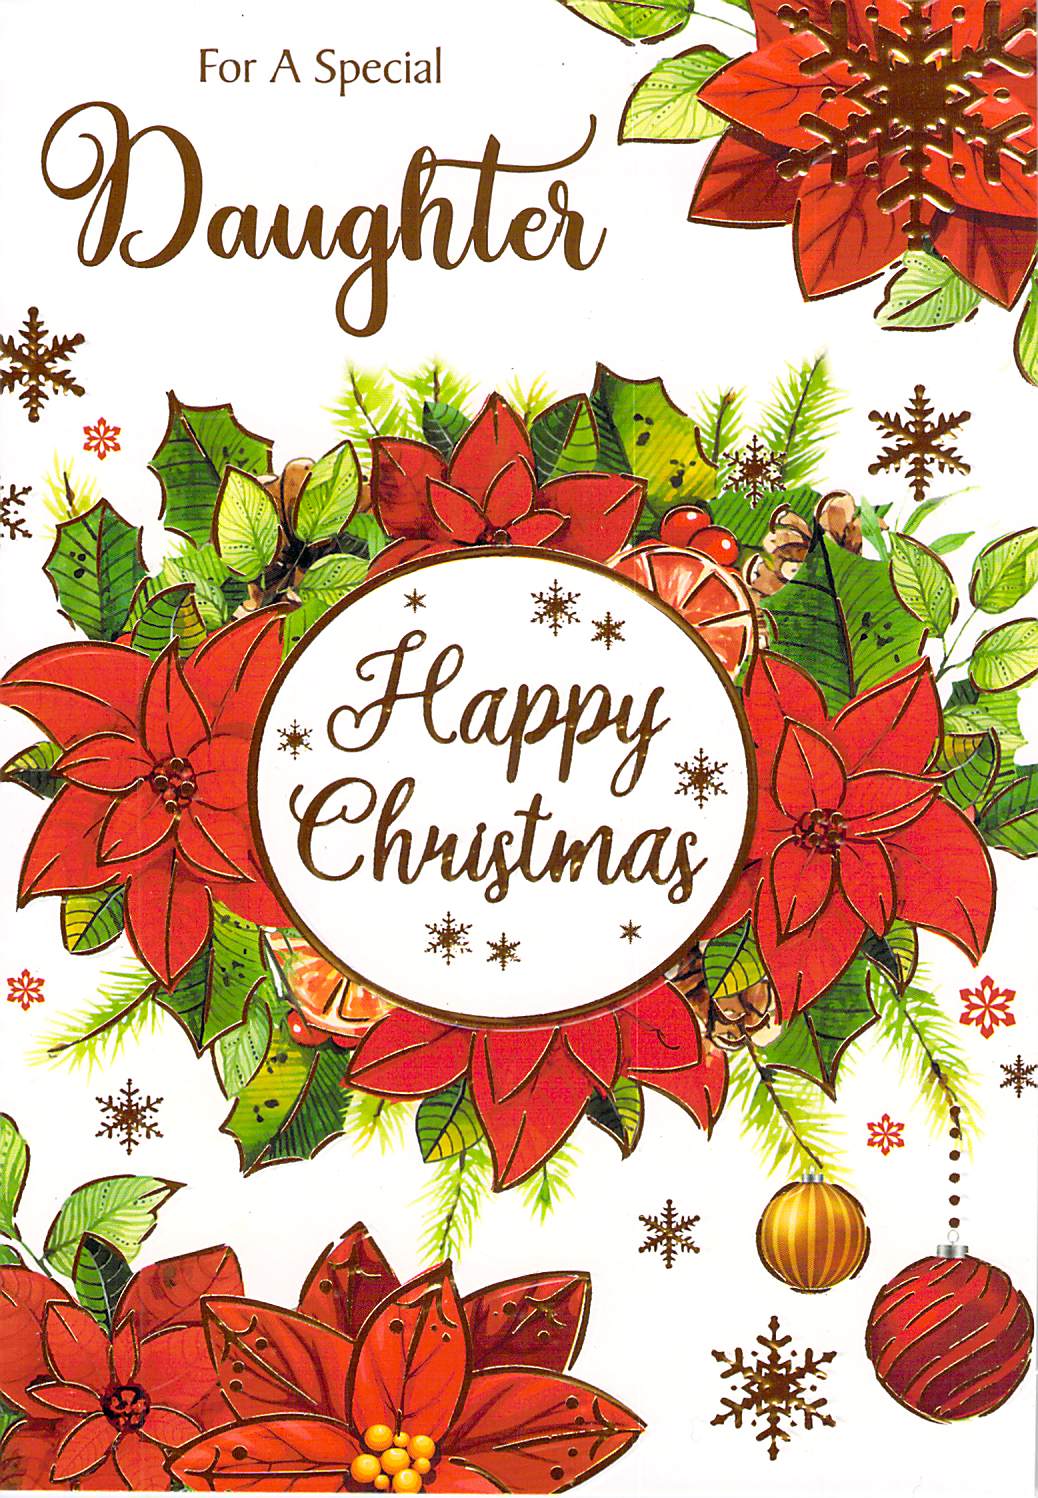 Christmas - Daughter - Wreath - Greeting Card  - Multi Buy Discount